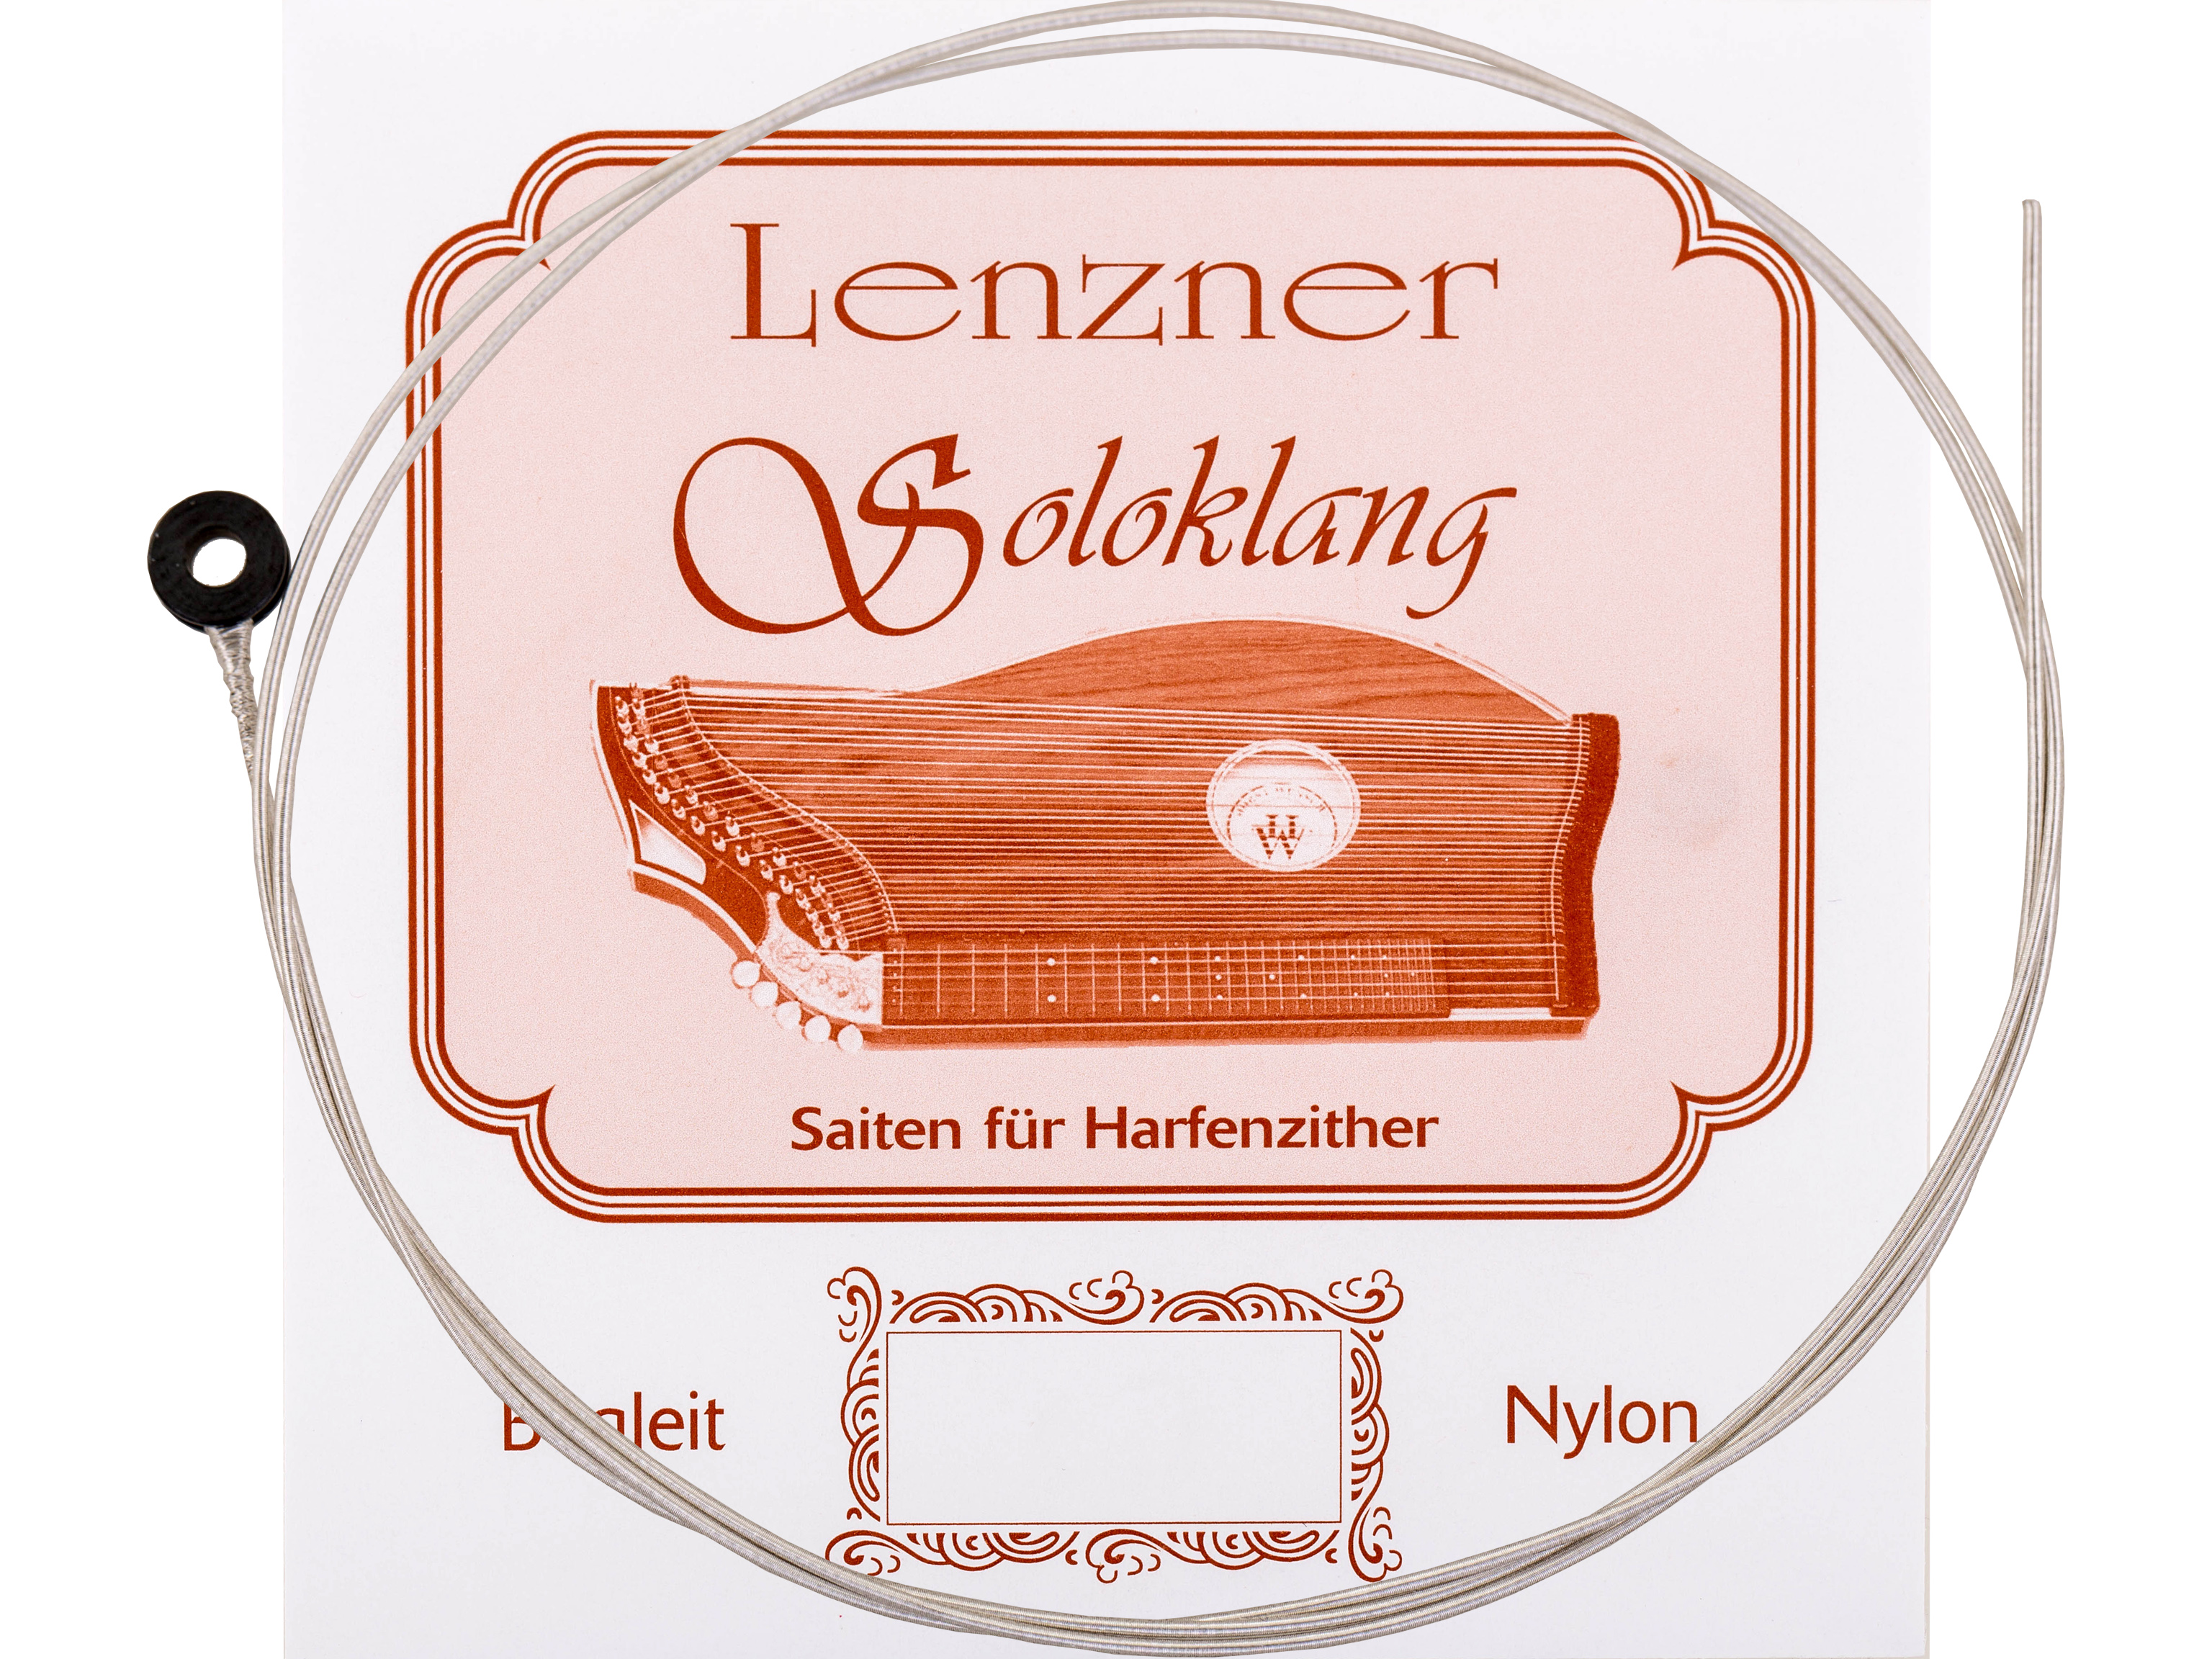 Lenzner 5. g Zithersaite Soloklang Begleit